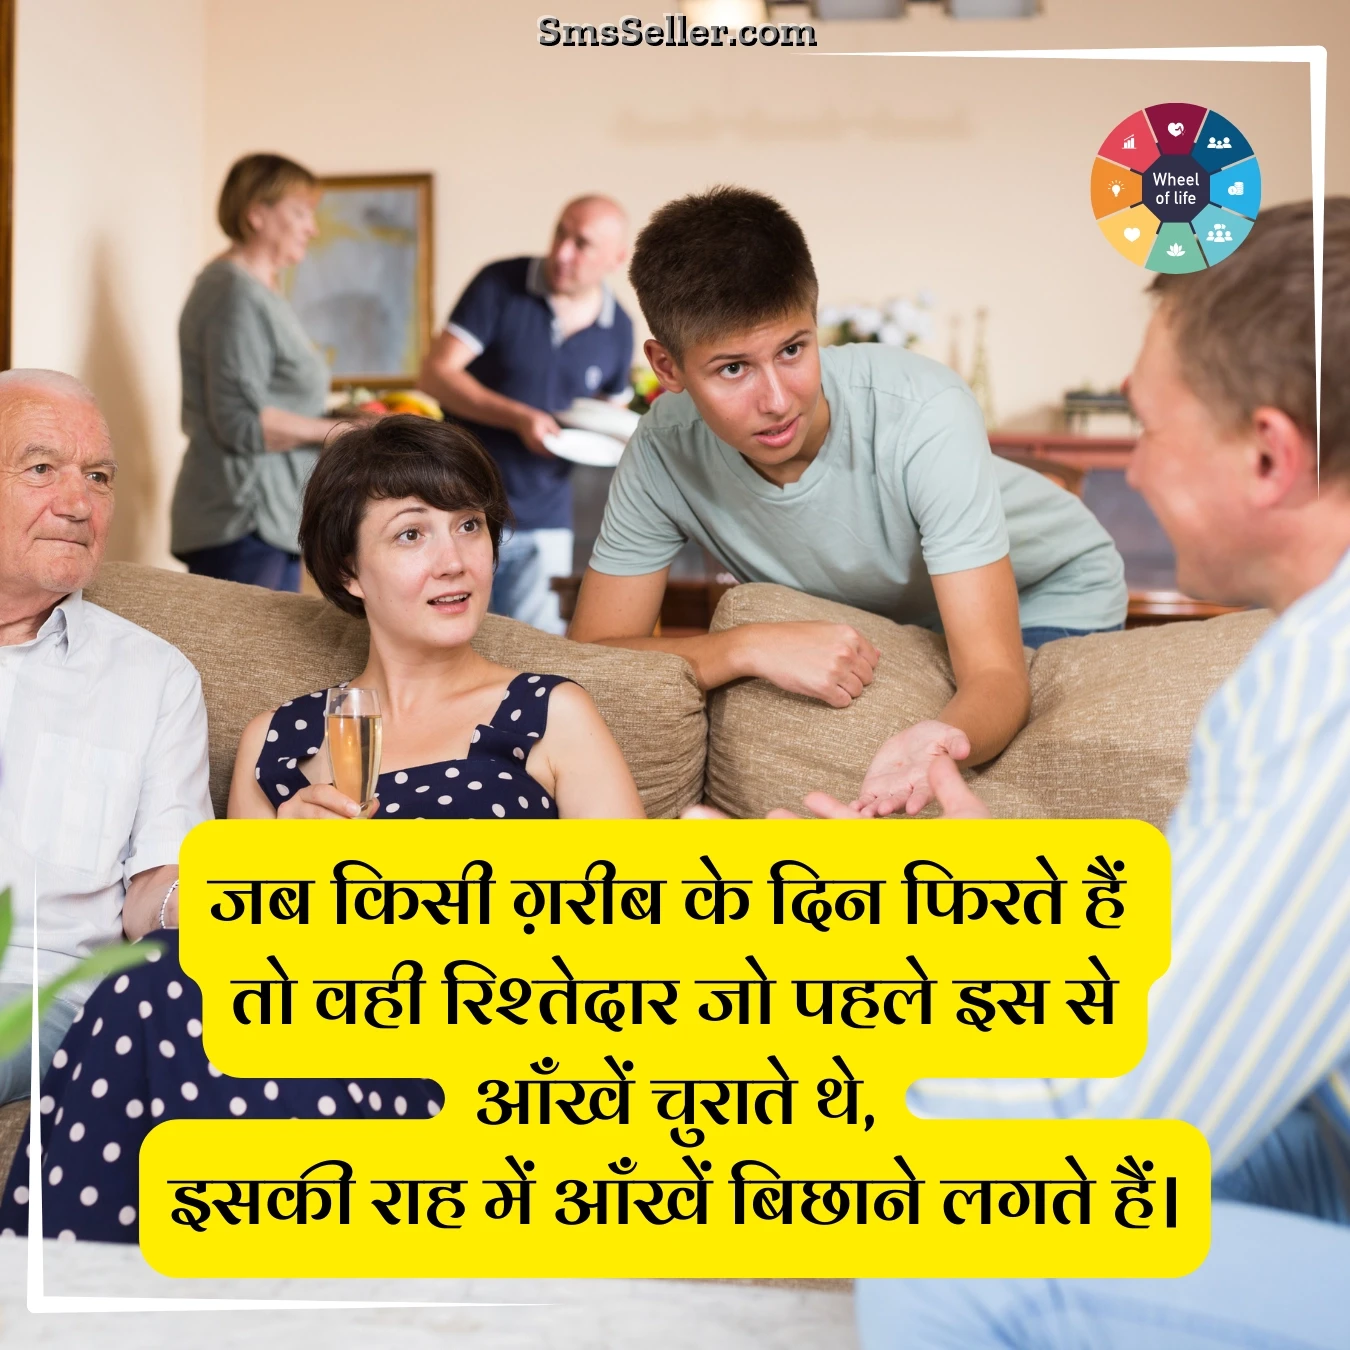 life quotes in hindi gareeb ka din badlne ki asha